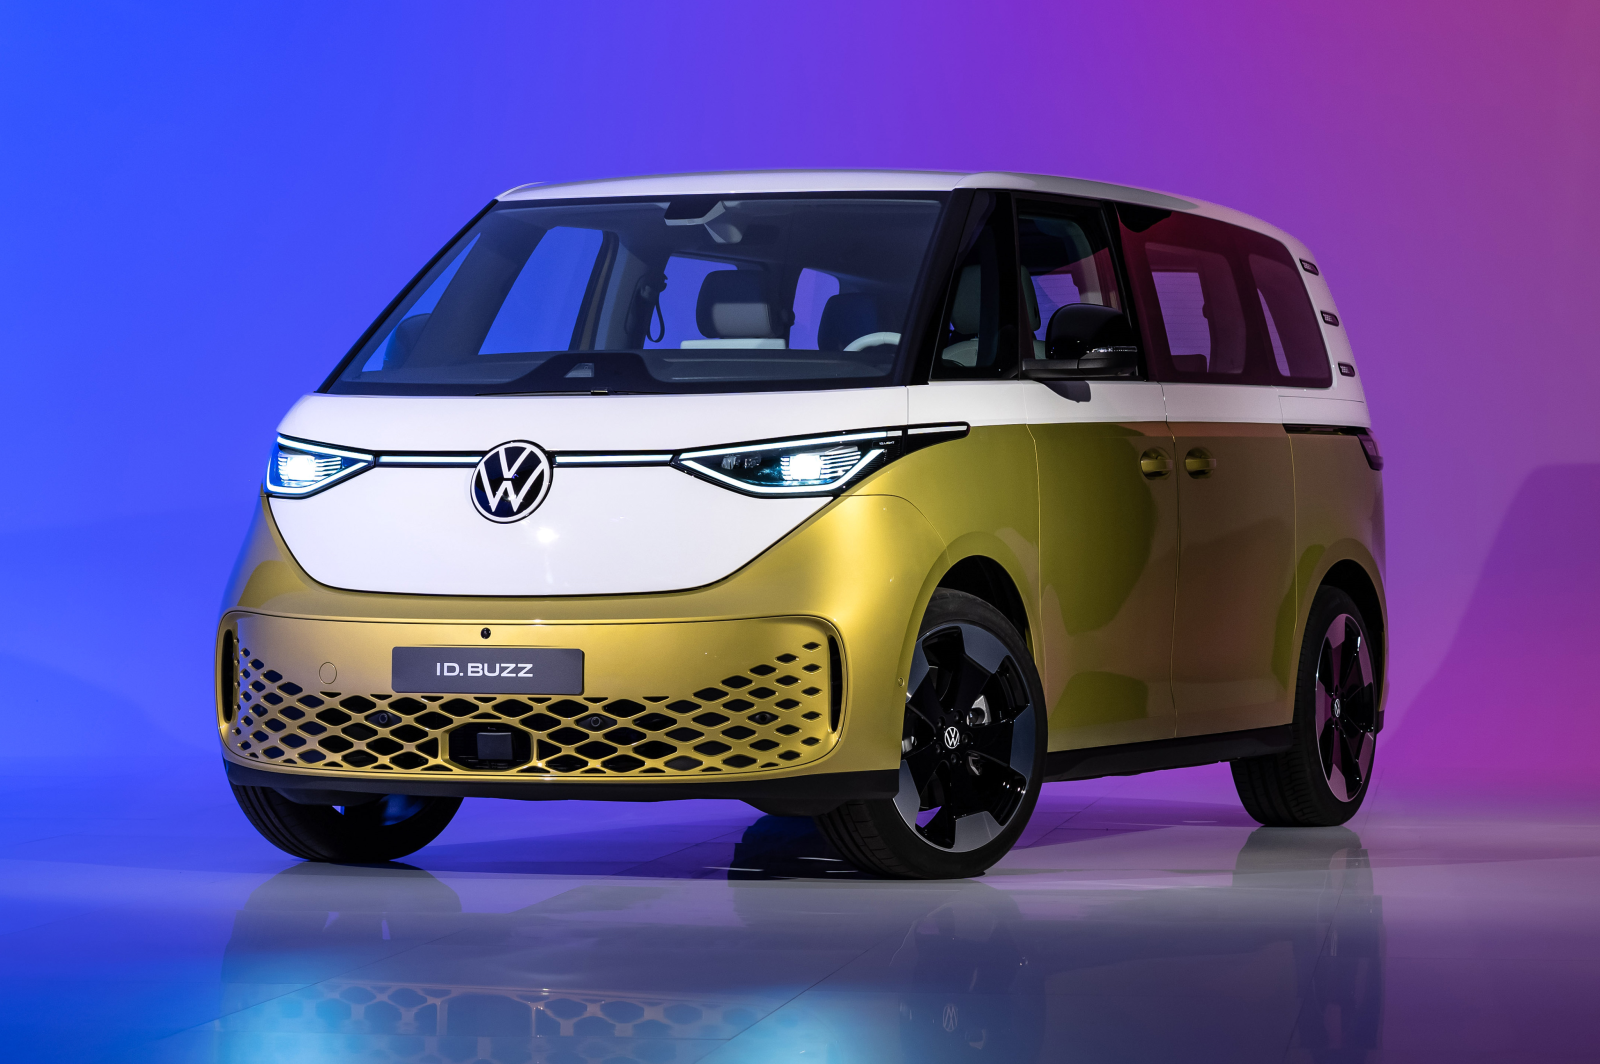 VW's new ID Buzz